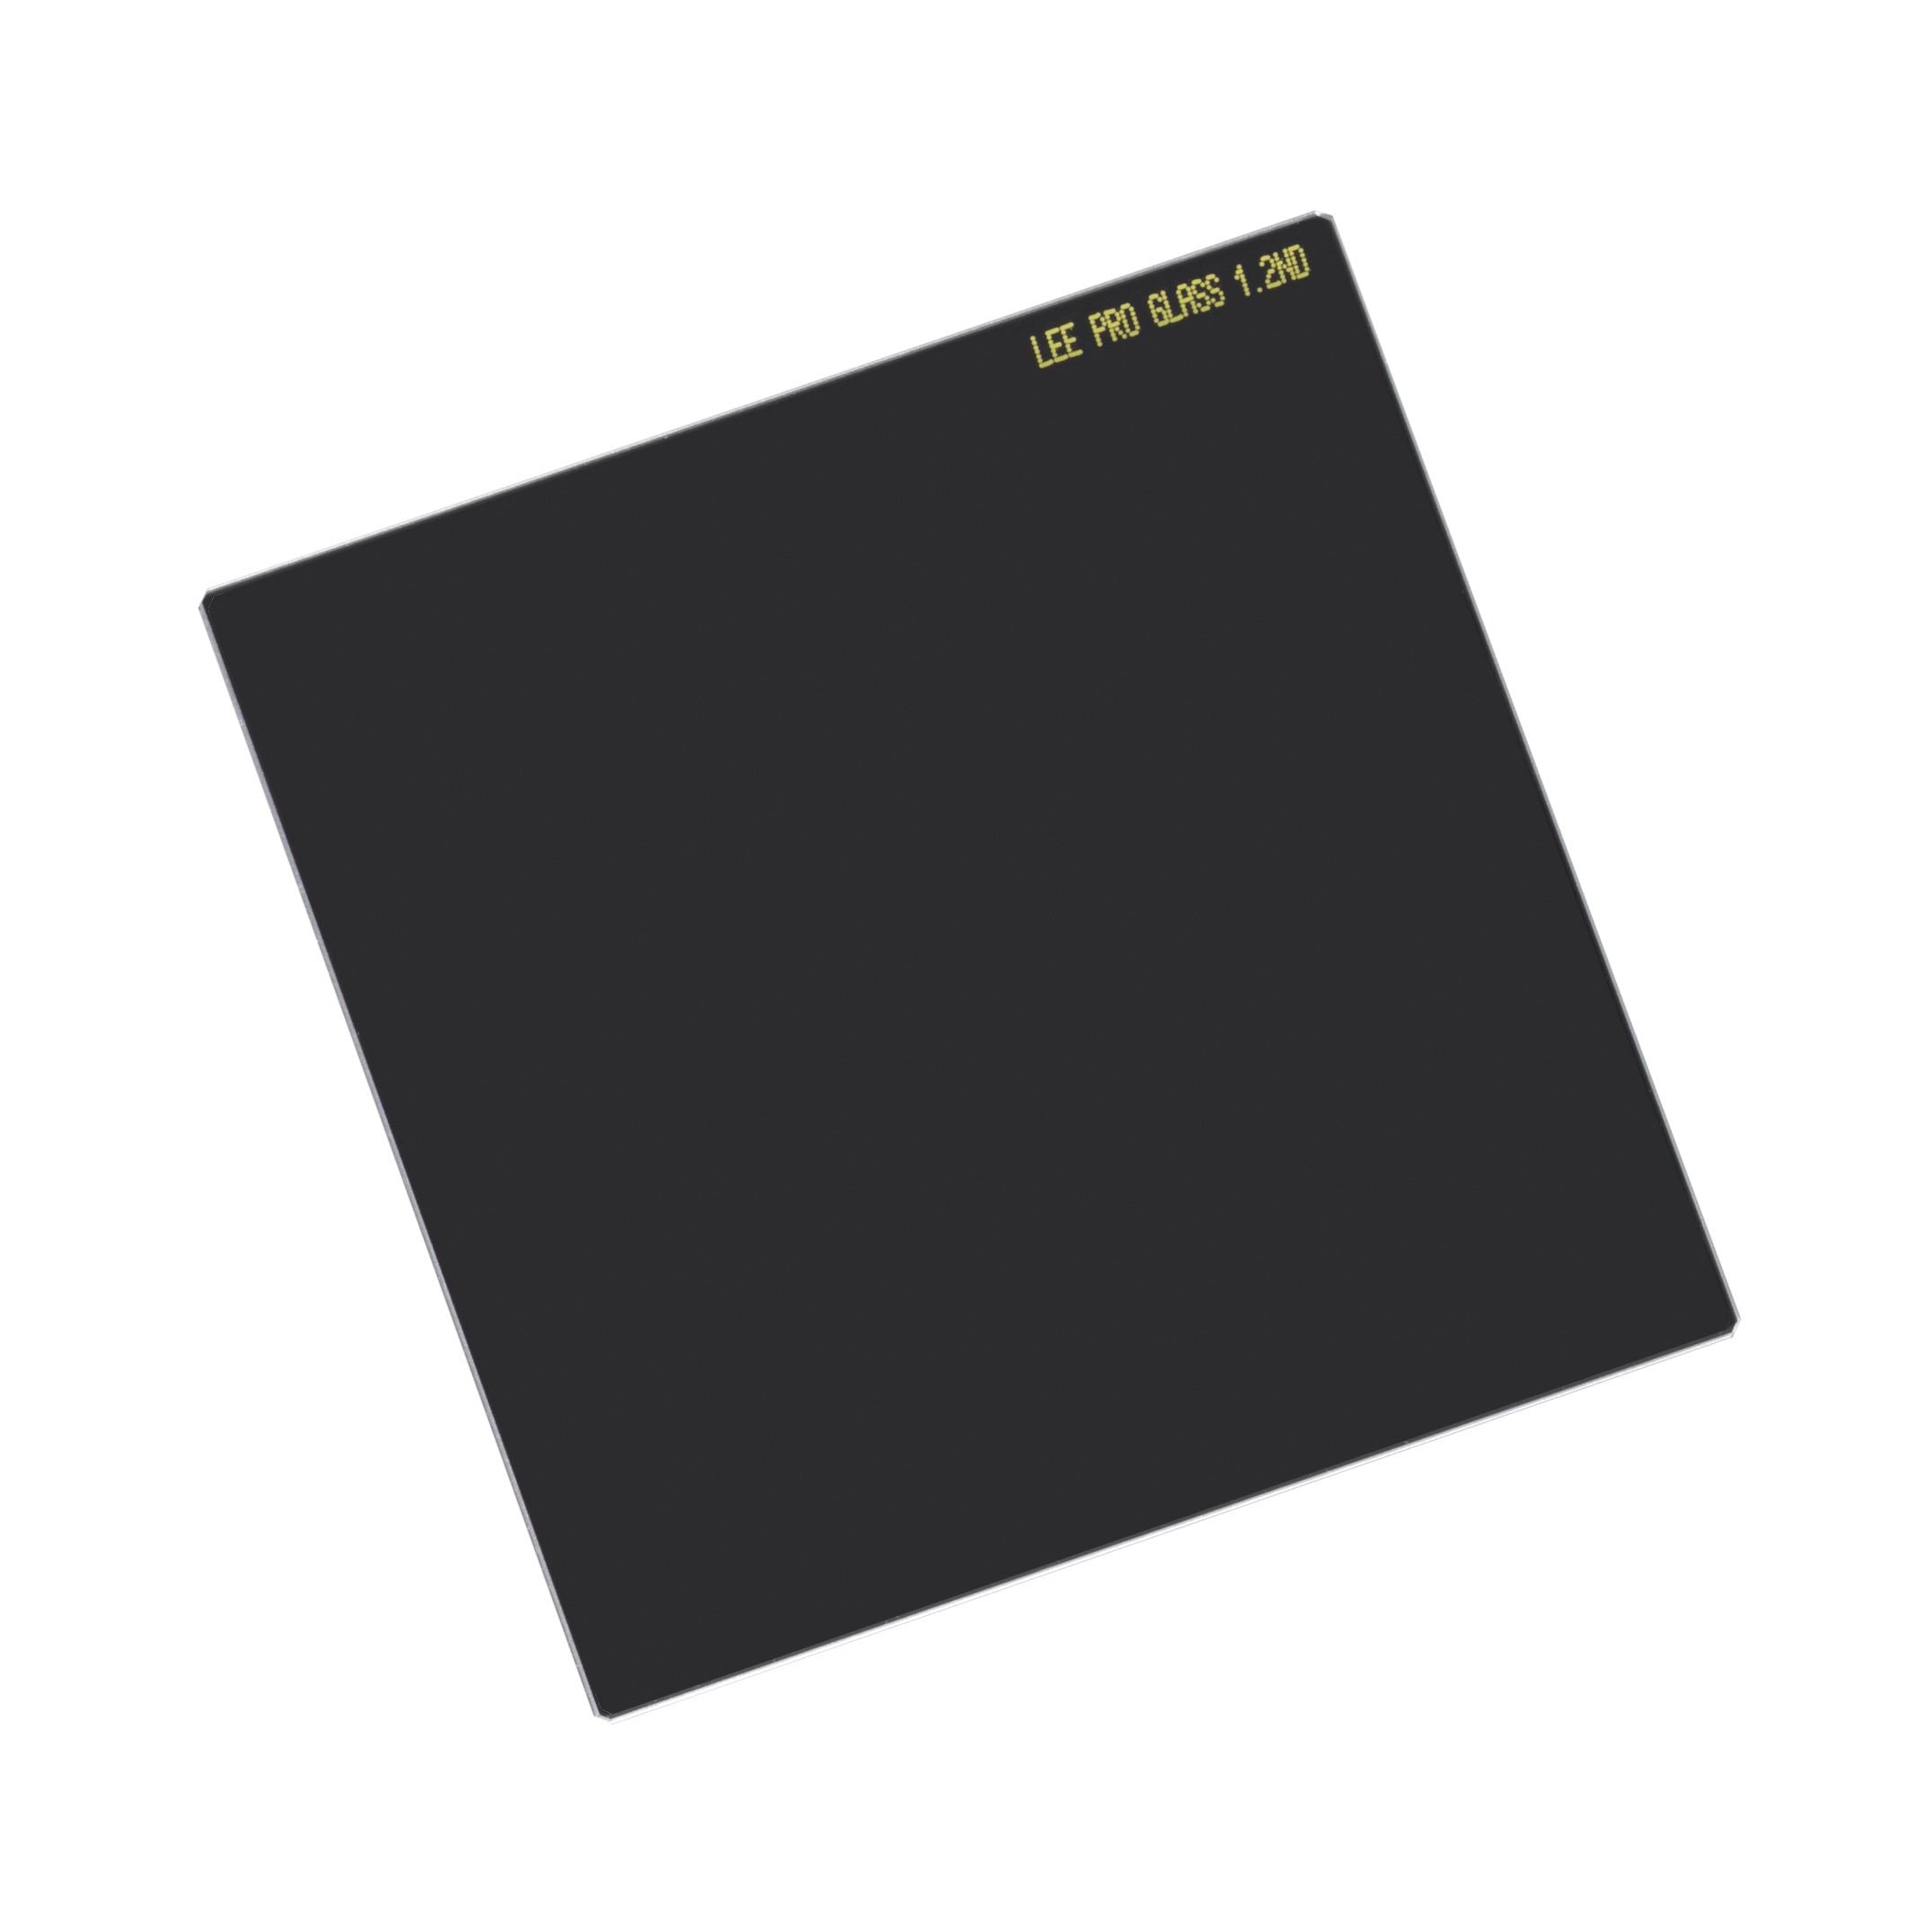 Lee 100 Solid ND ProGlass IRND Filter - 4 Stops